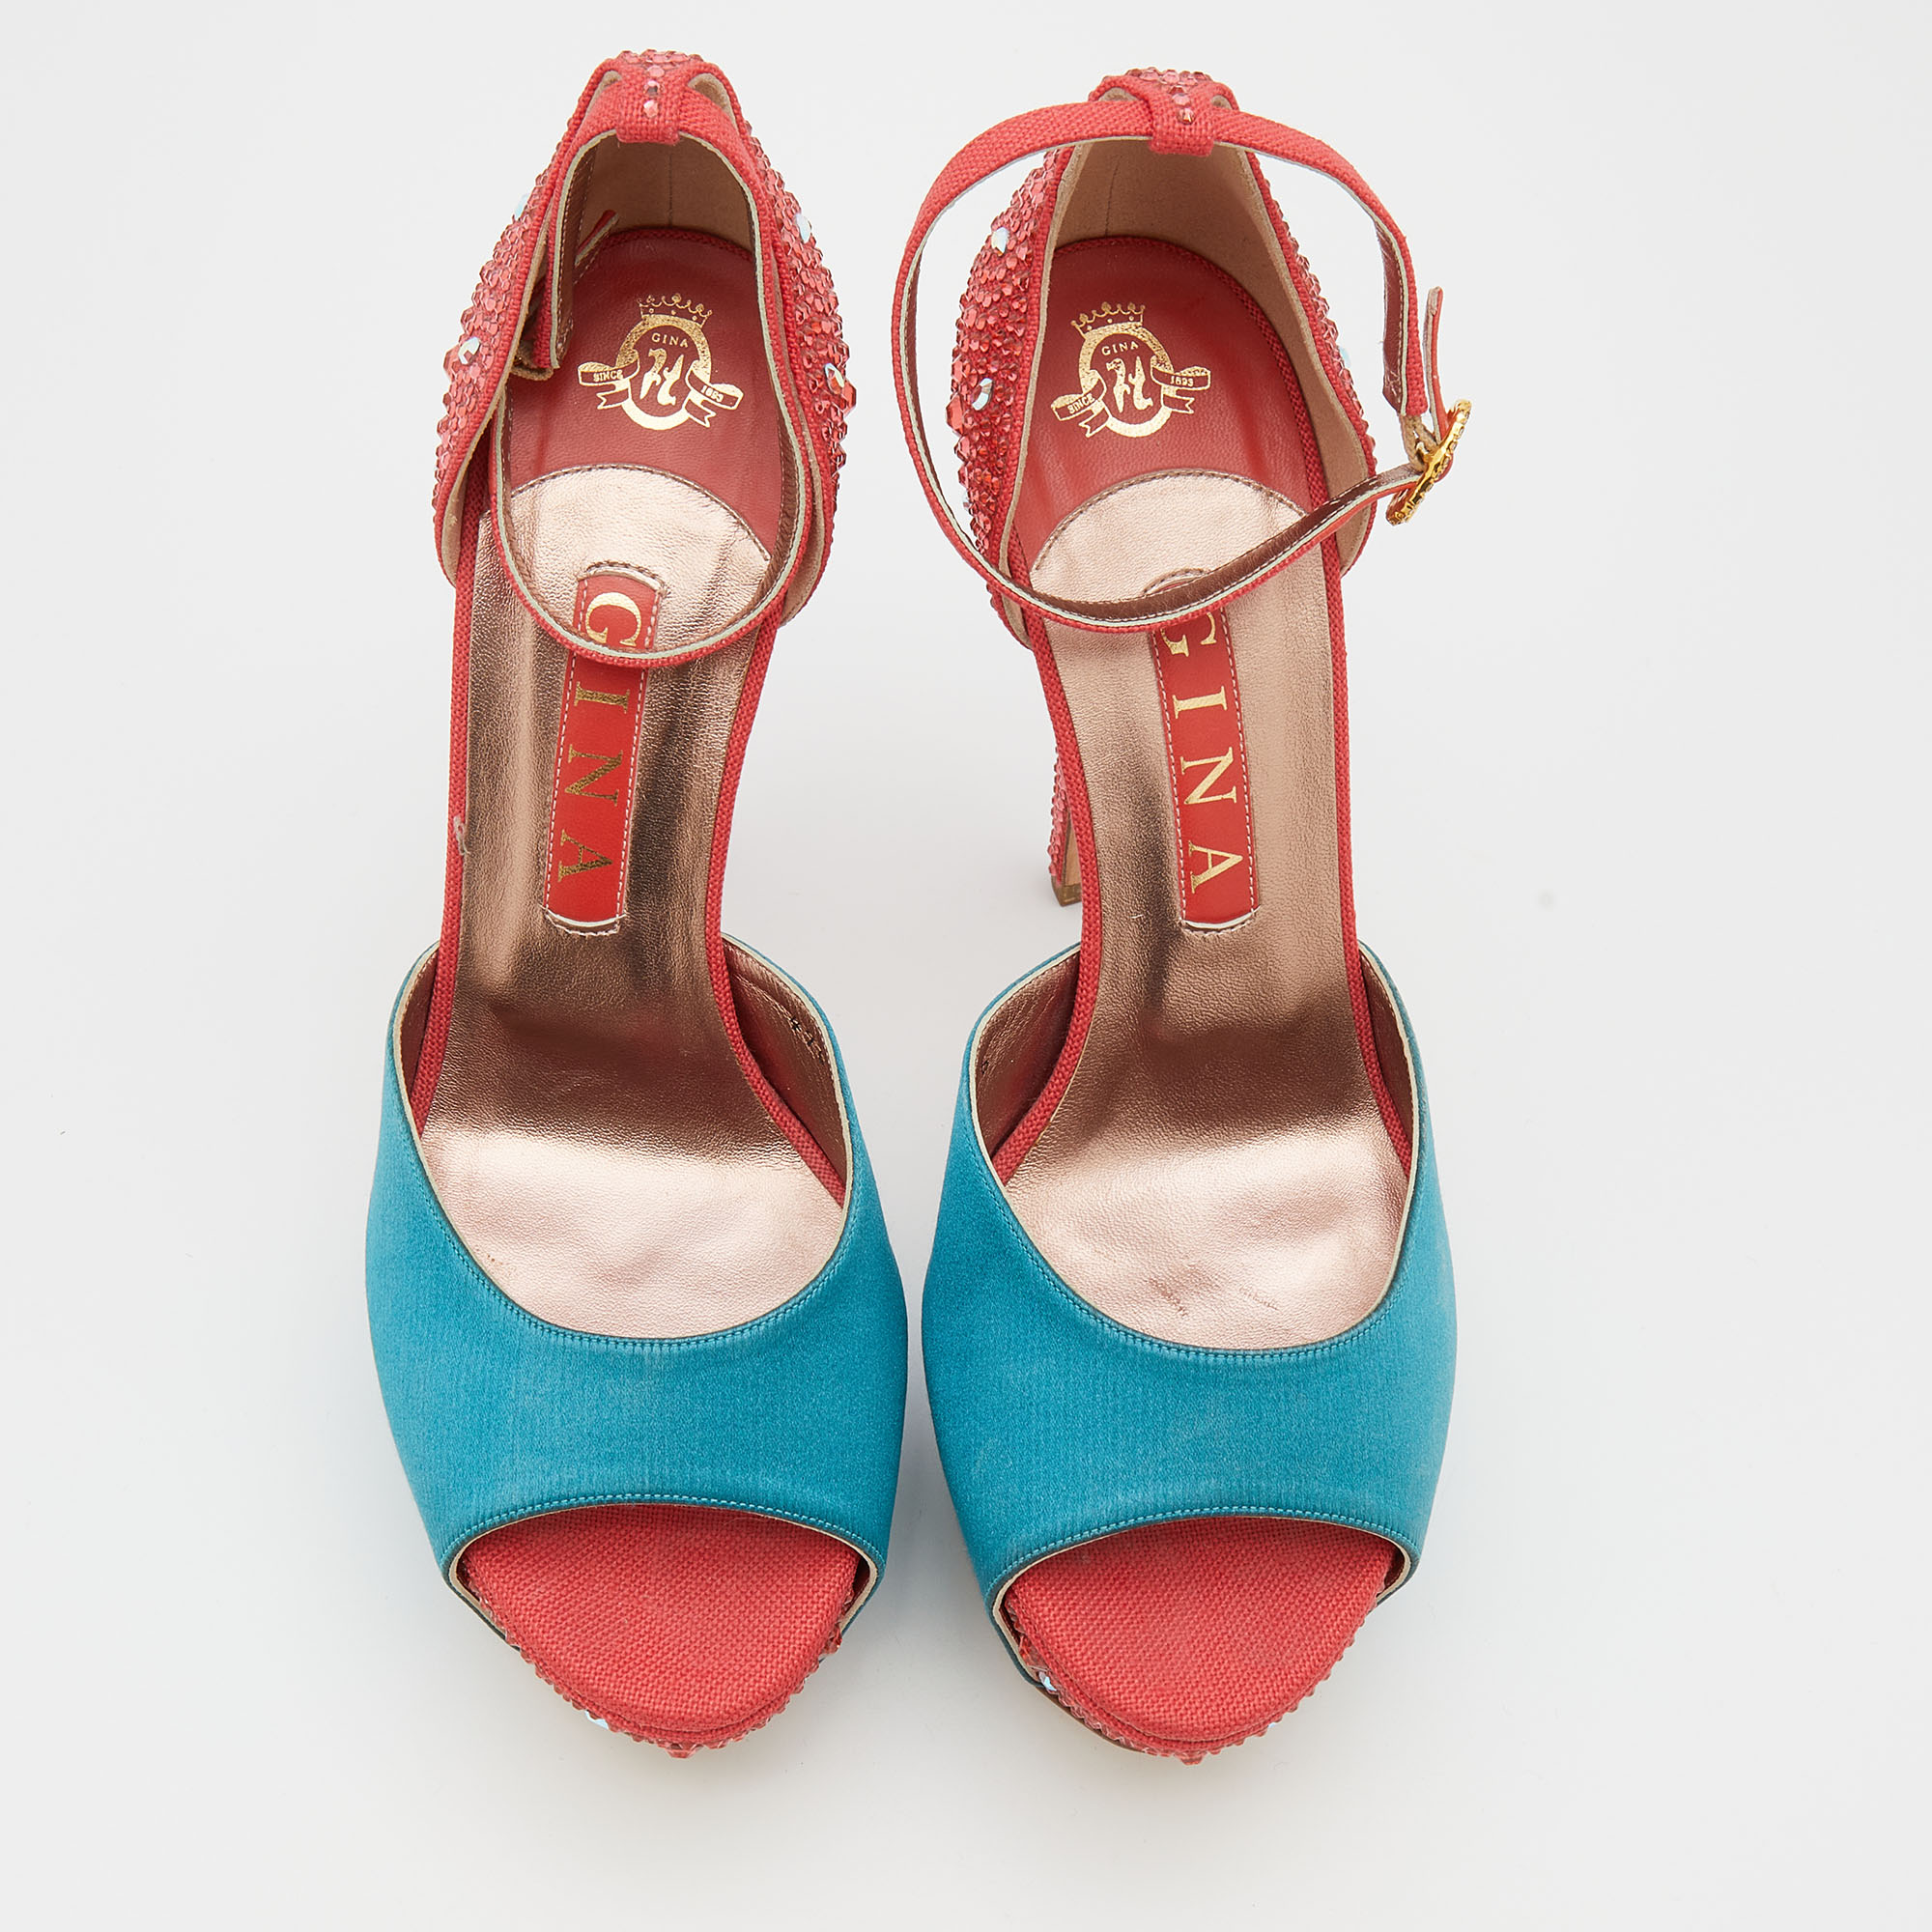 Gina Turquoise/Red Satin And Canvas Crystal Embellished Platform Ankle Strap Sandals Size 39